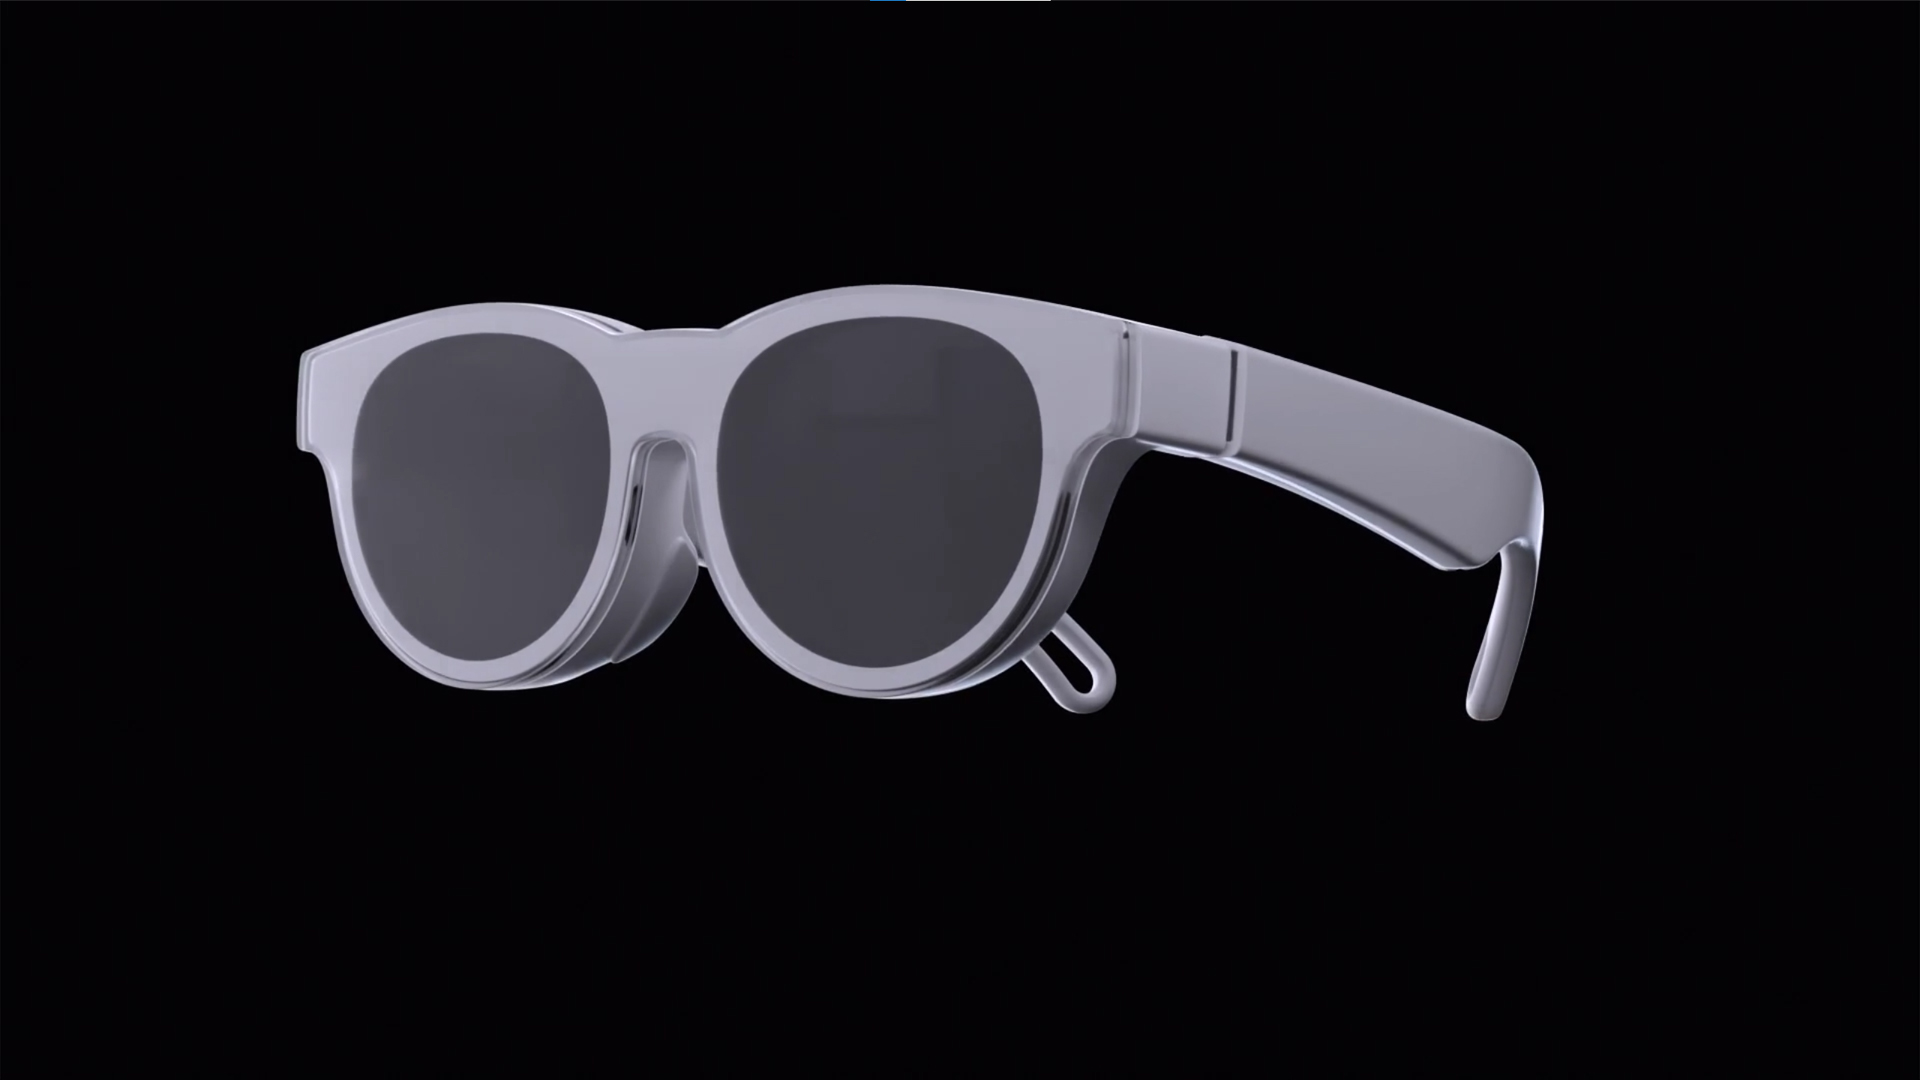 Samsung-AR-Glasses-Design